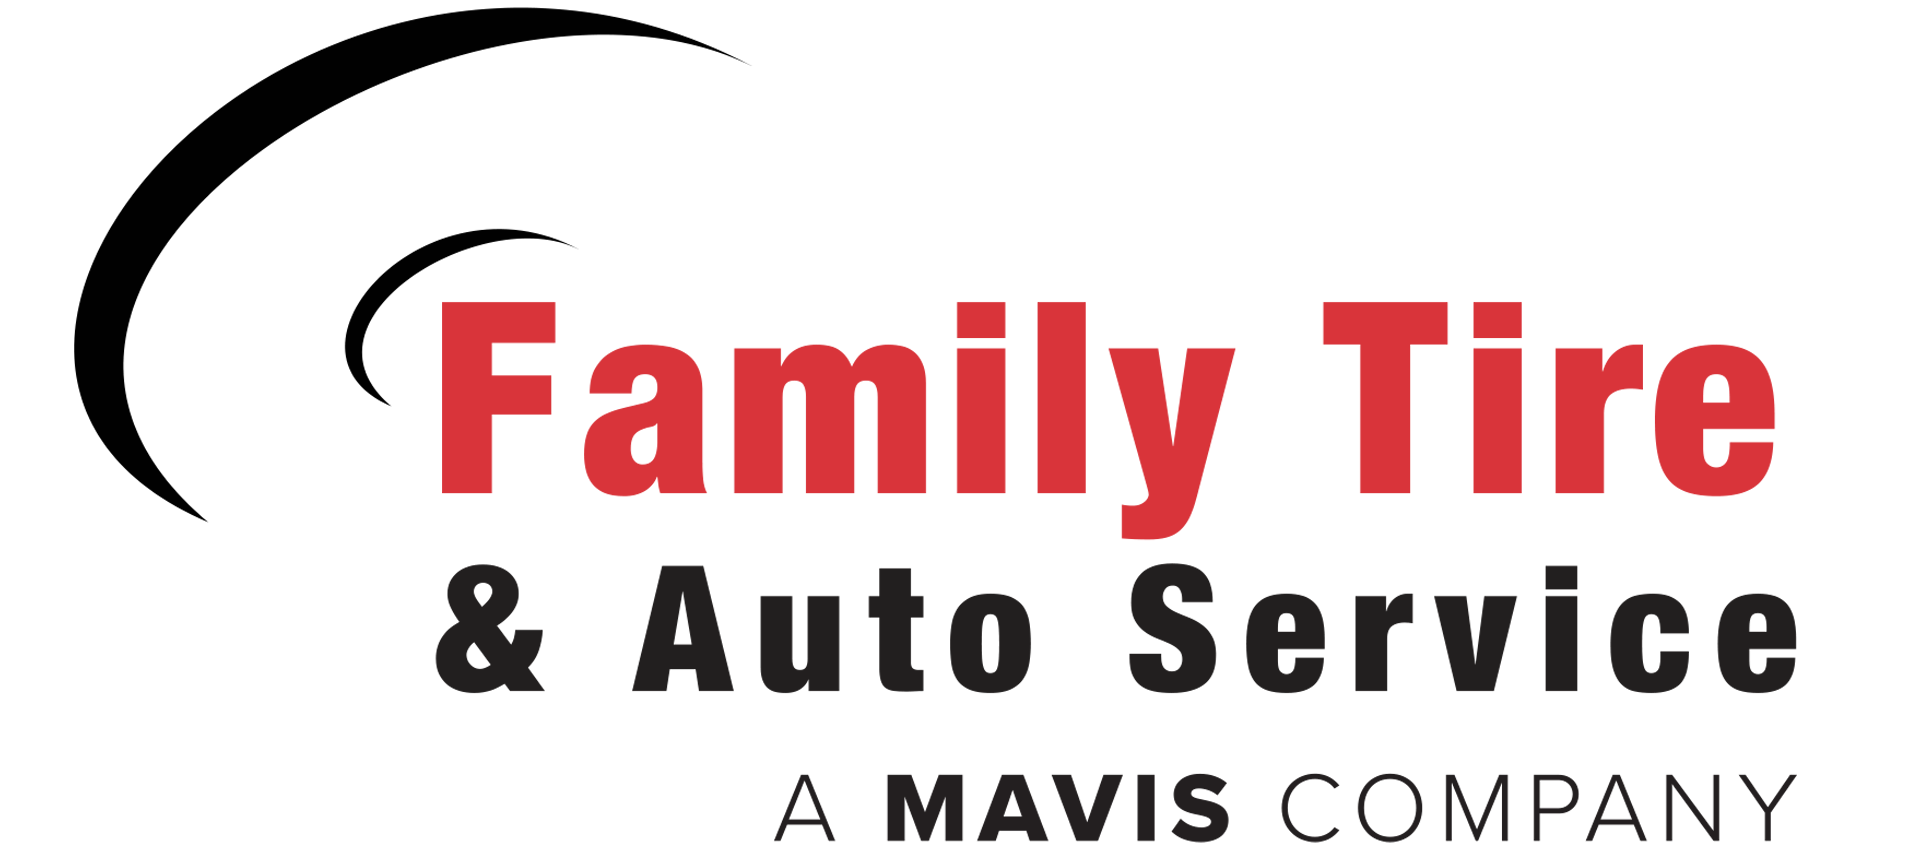 Family Tire & Auto